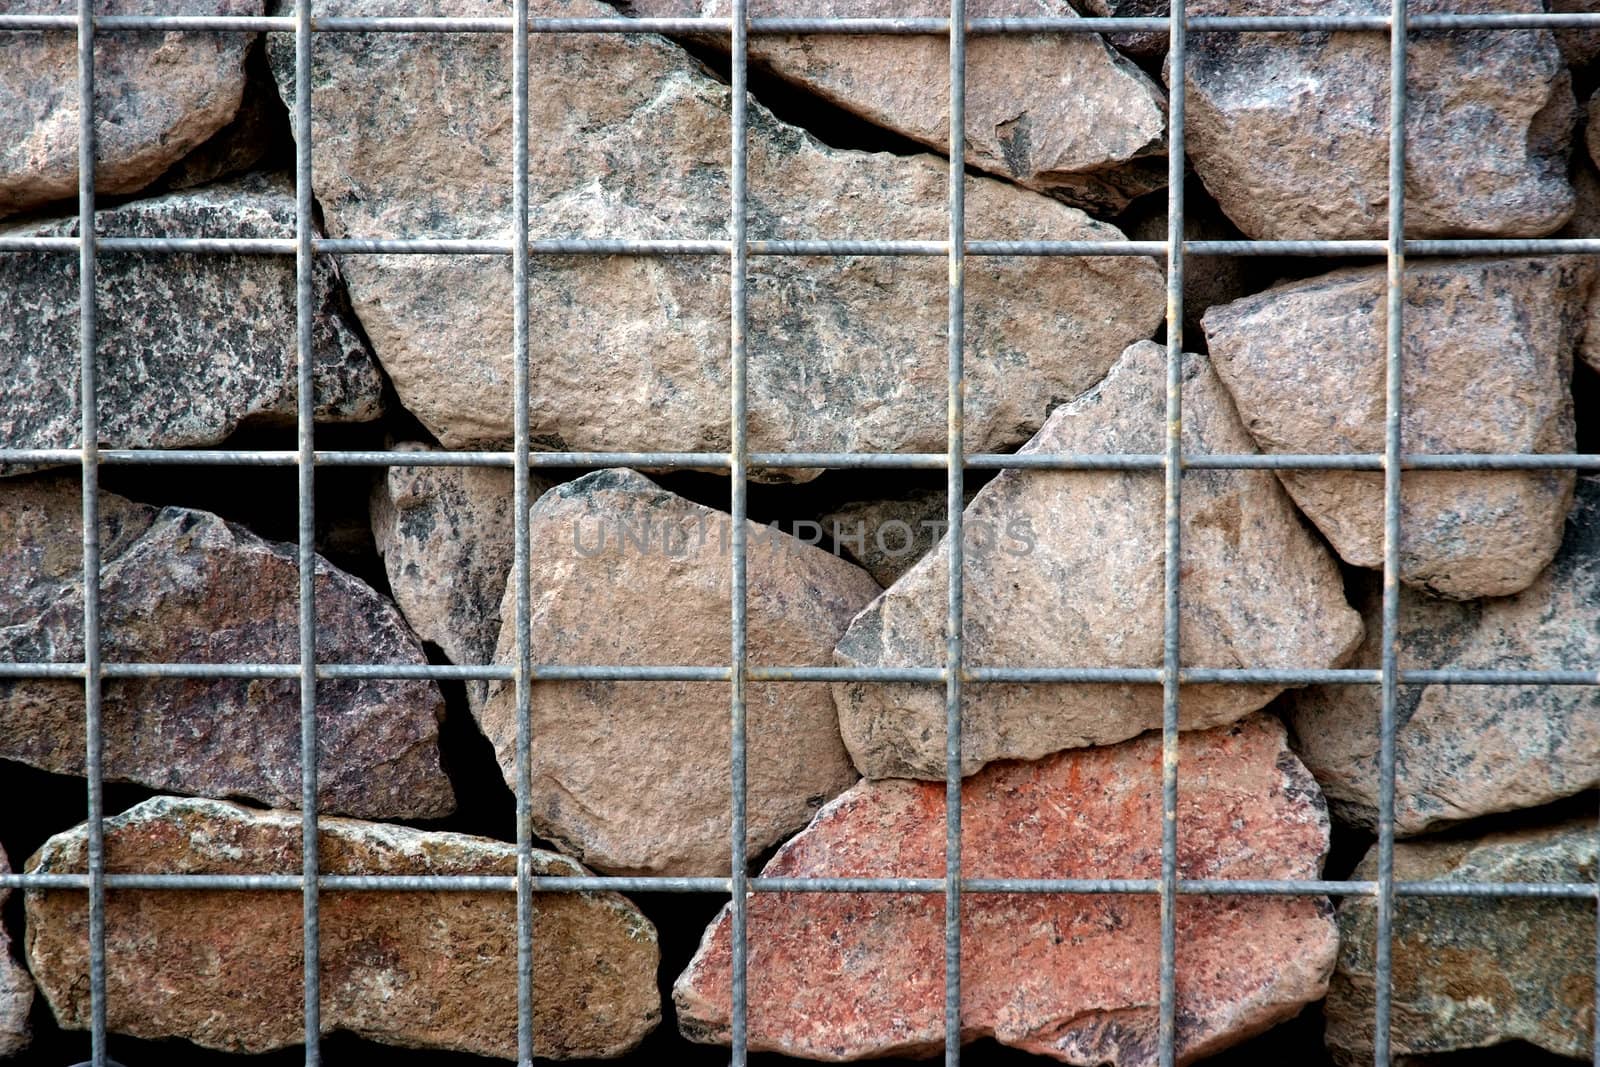 Caged Stone by runamock